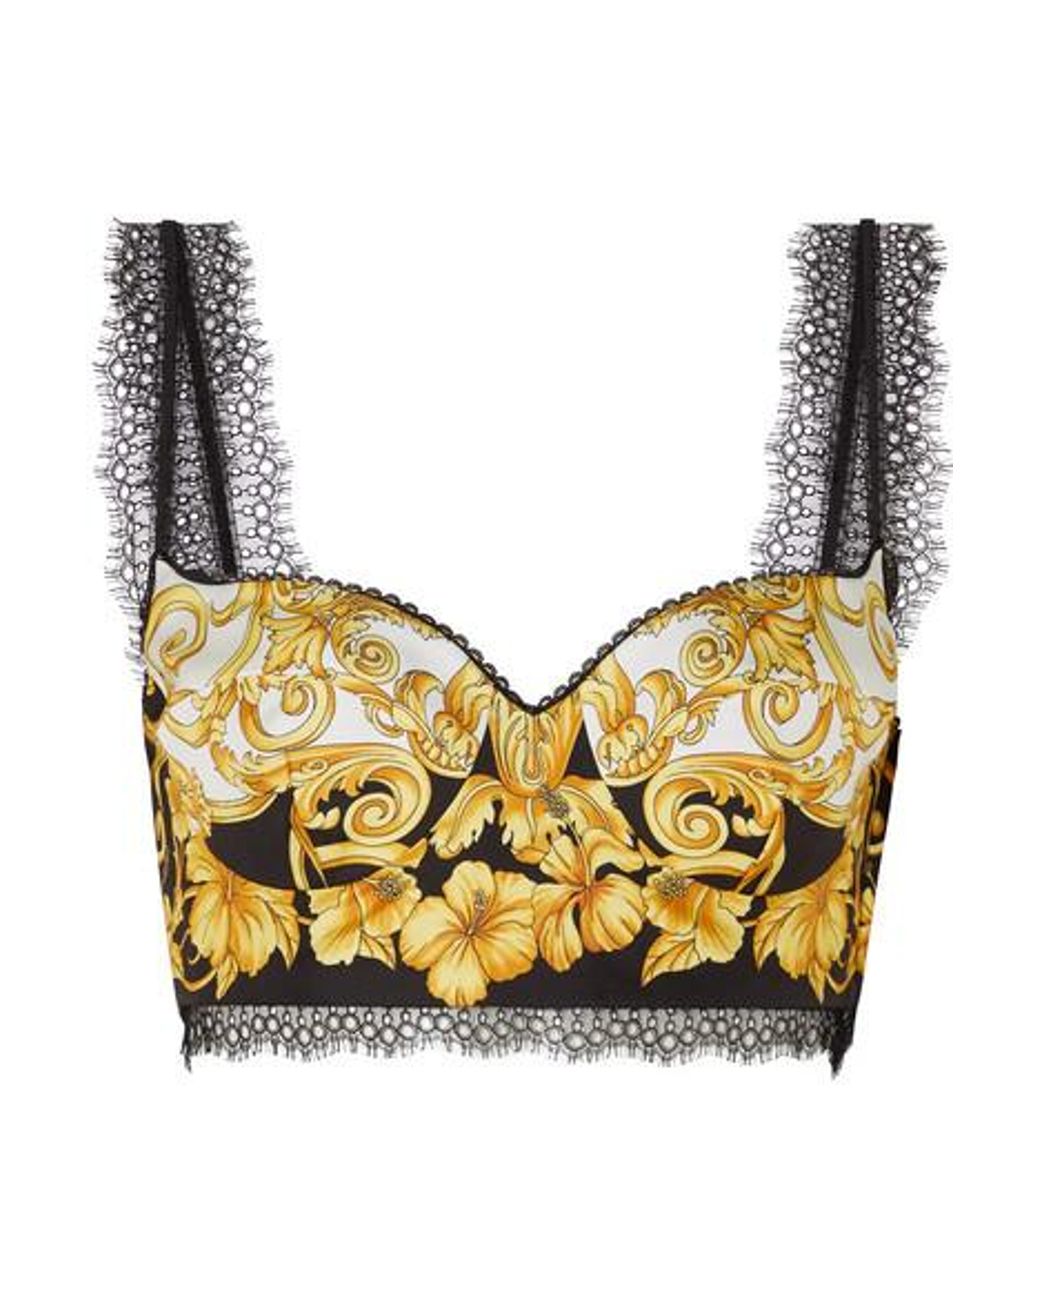 Versace corset-style Lace Bra - Farfetch